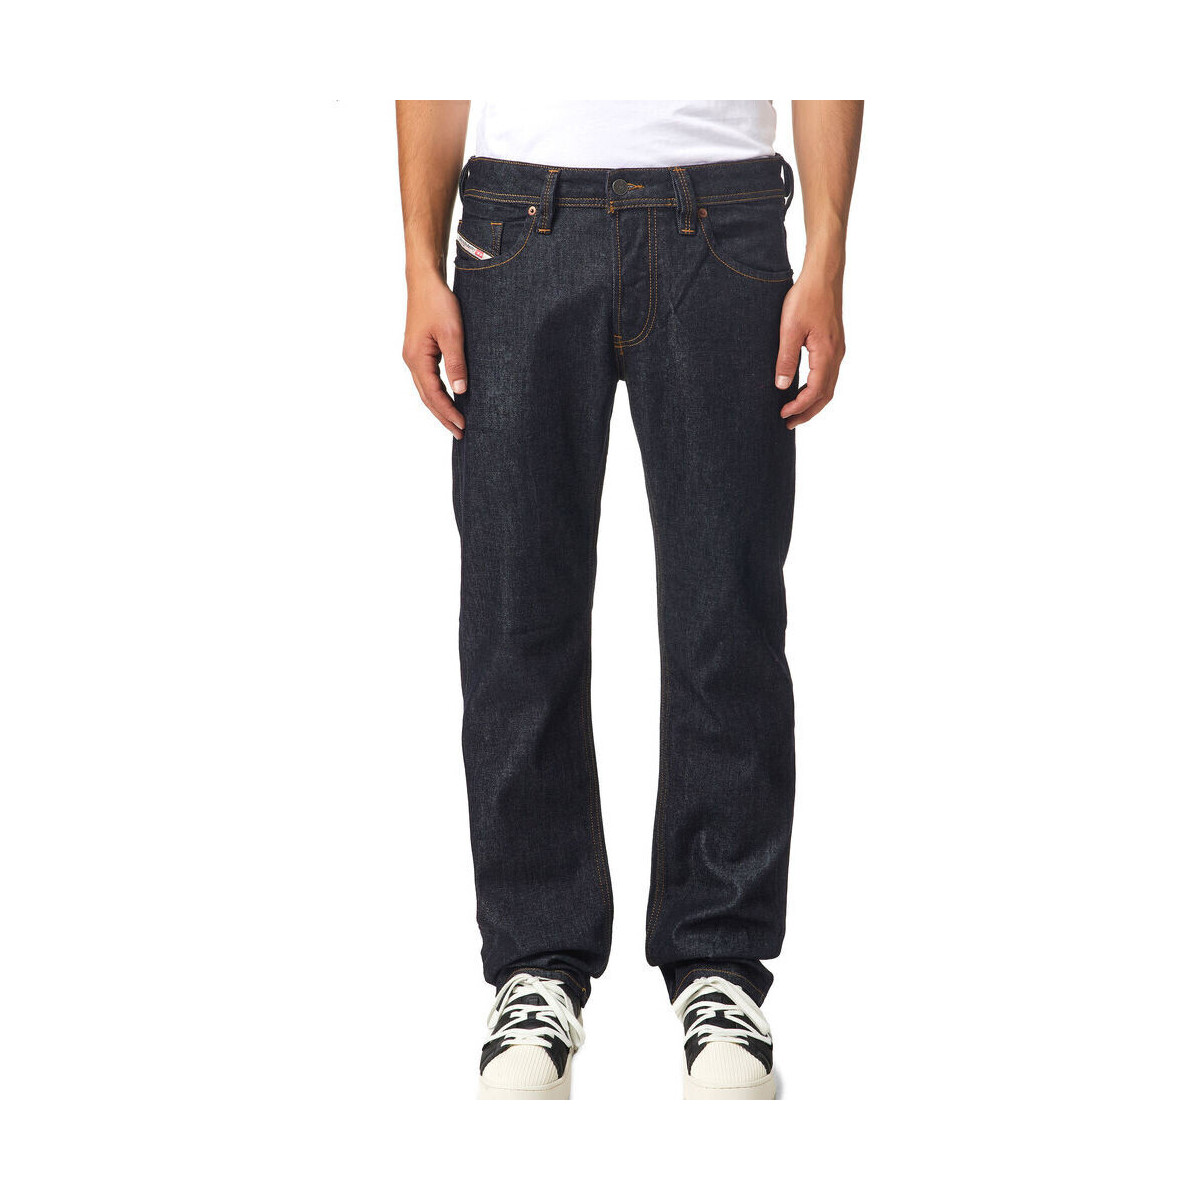 Vêtements Homme Benetton jeans брюки штаны джинсы бежевые 28 w оригинал argo A00891-RR9HF Noir